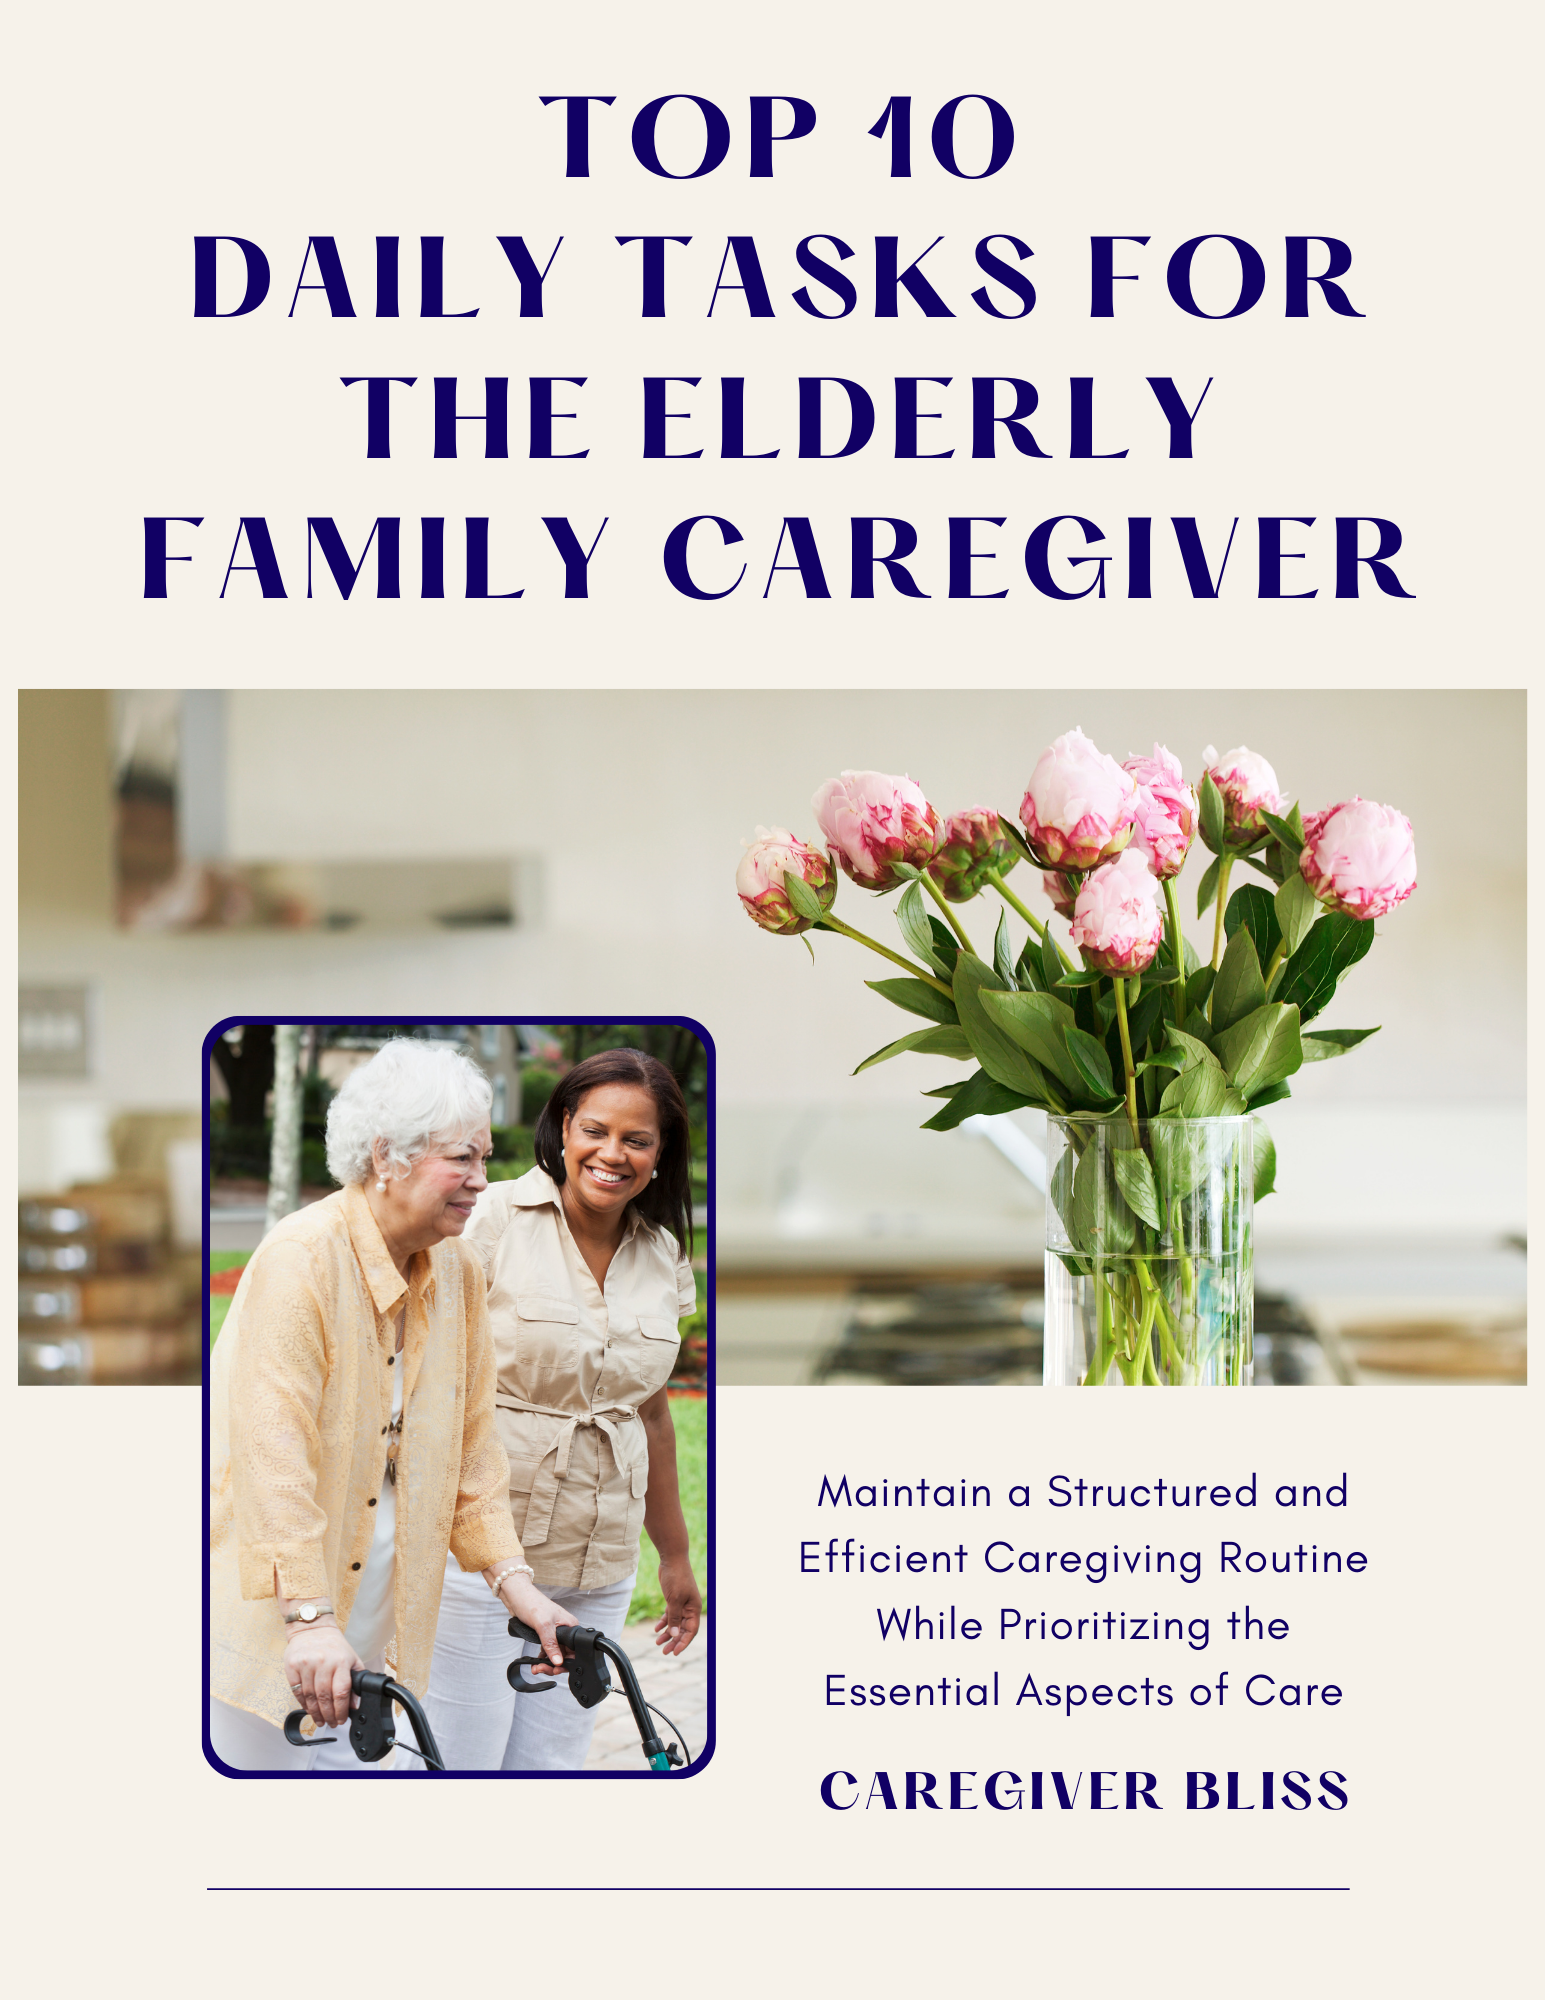 Top 10 Daily Tasks For The Elderly Family Caregiver | Caregiver Bliss